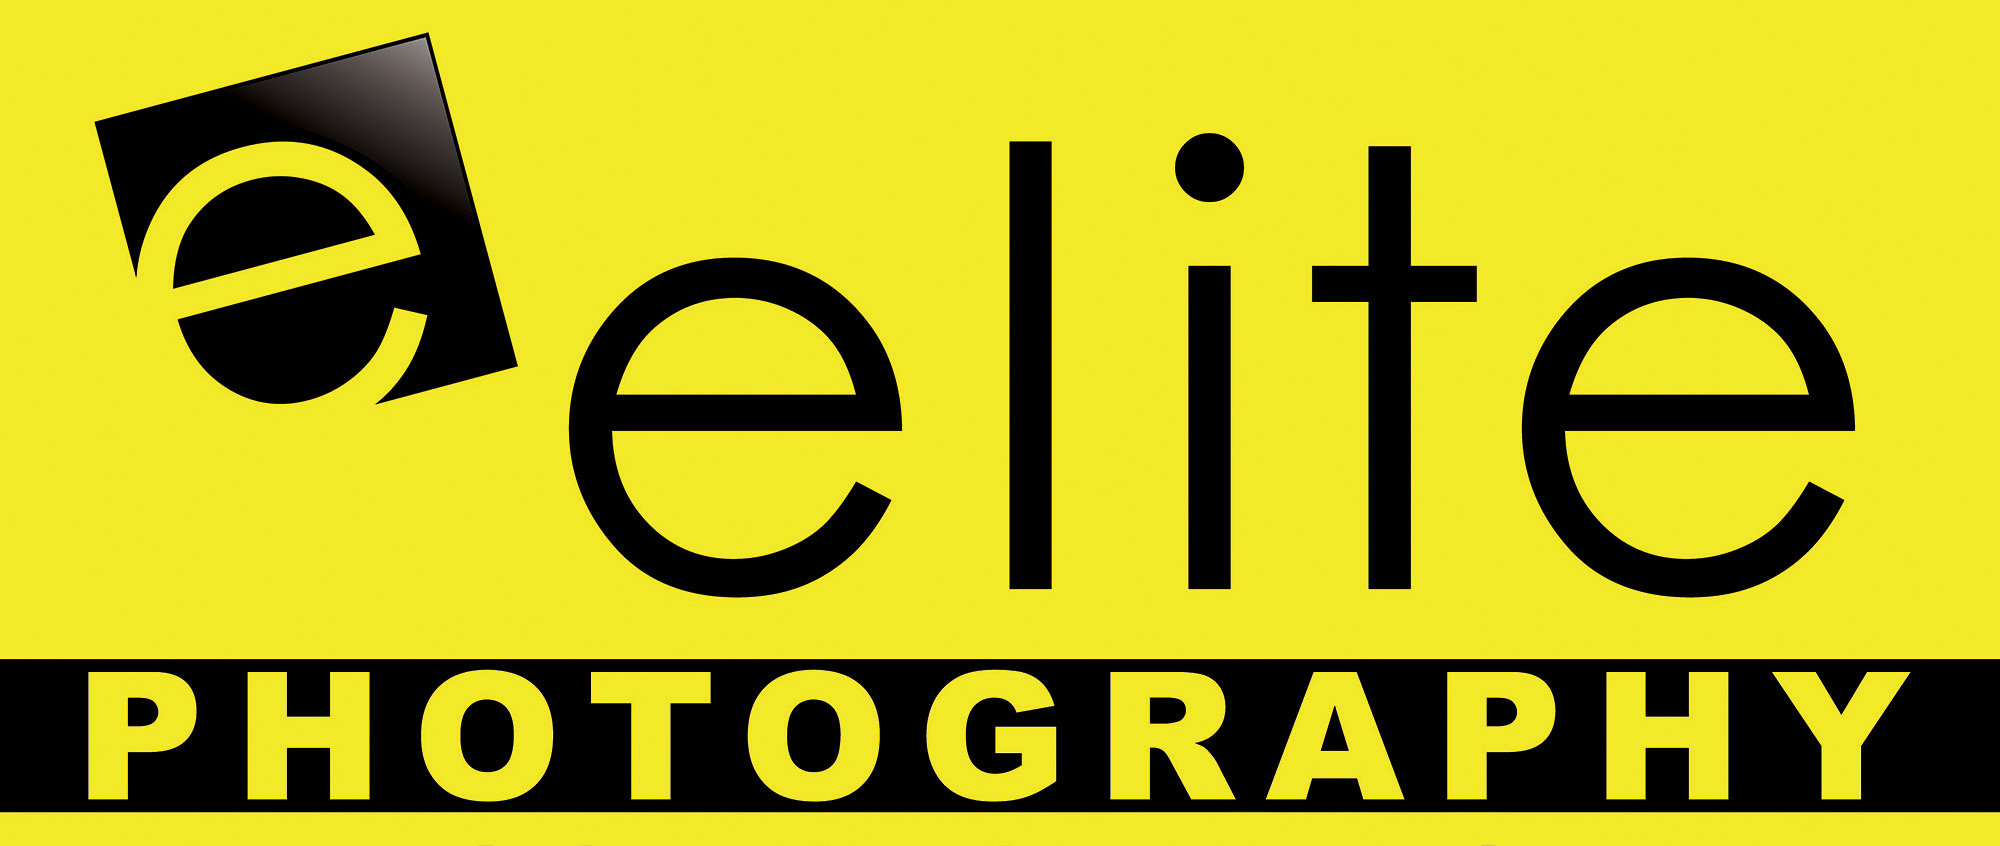 000-Elite Logo 2000 wide